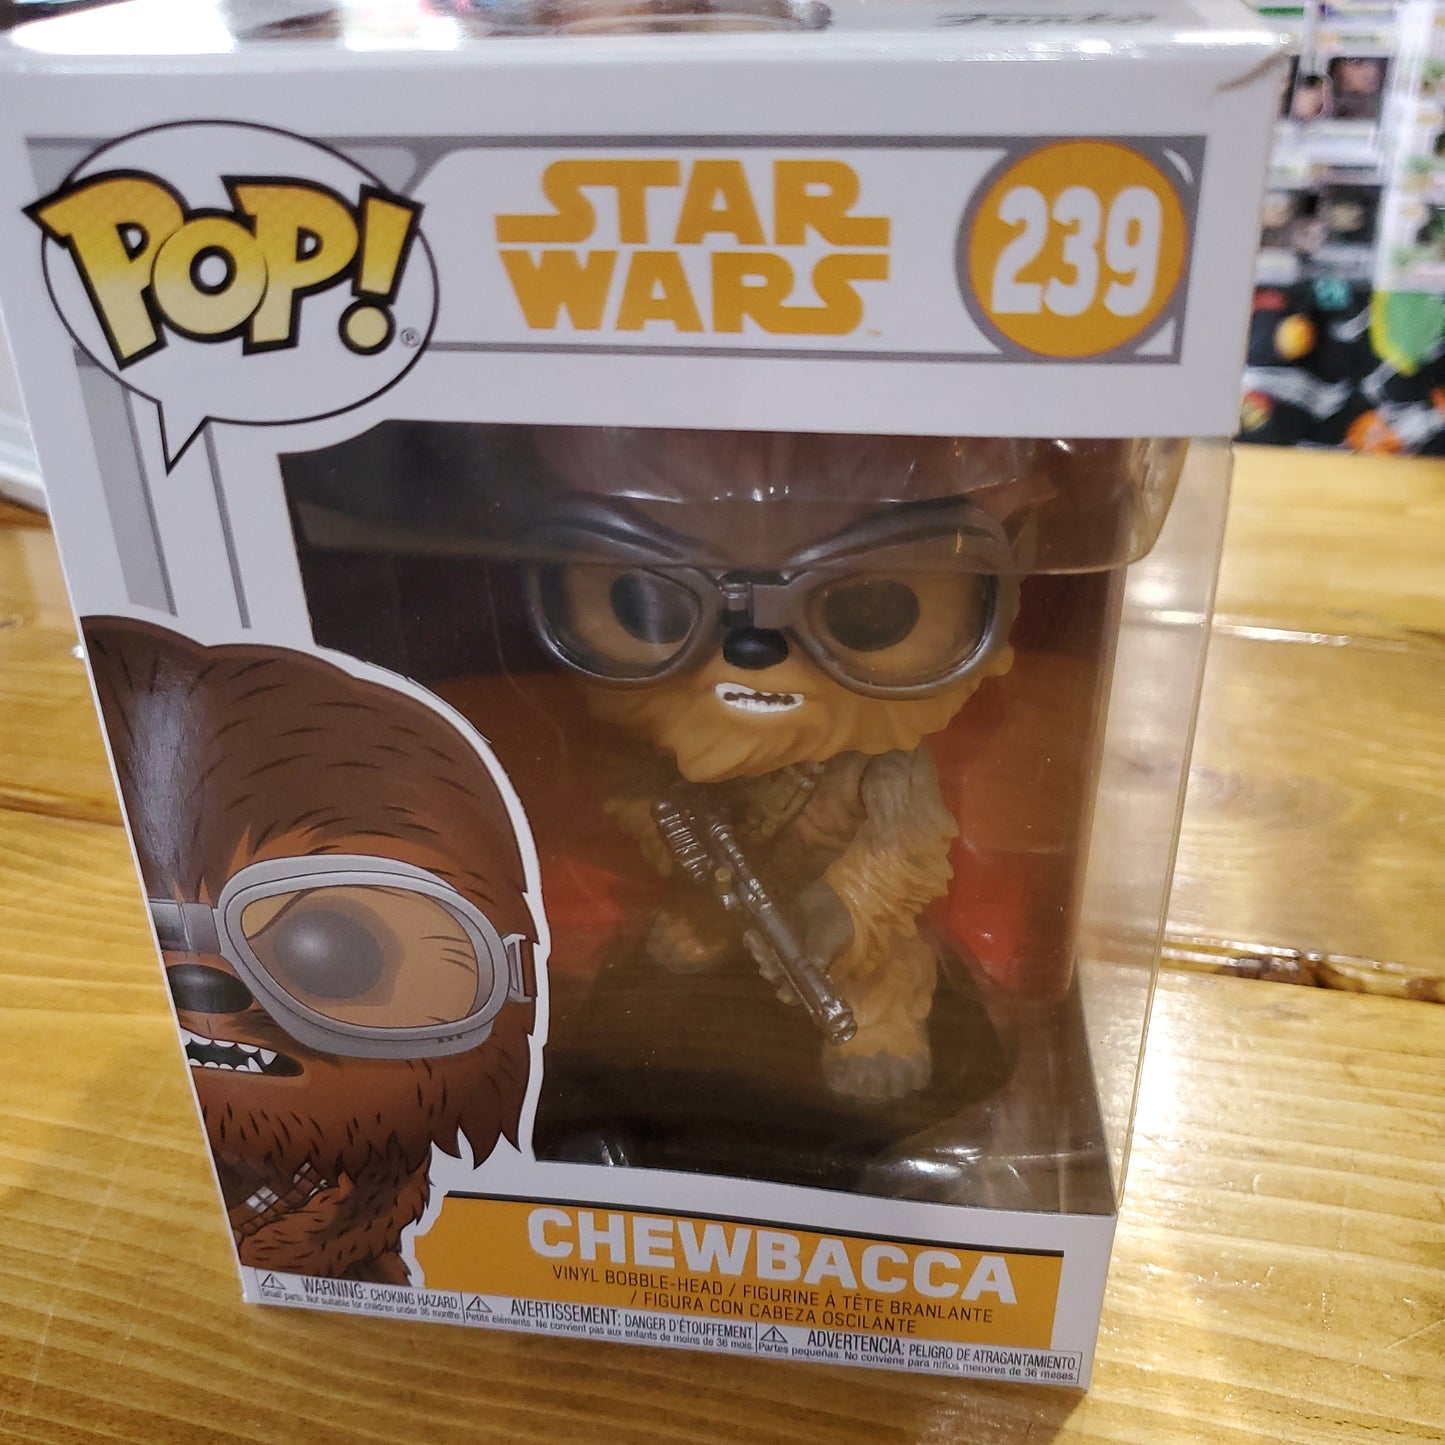 Star Wars Chewbacca 239 Funko Pop! Vinyl figure